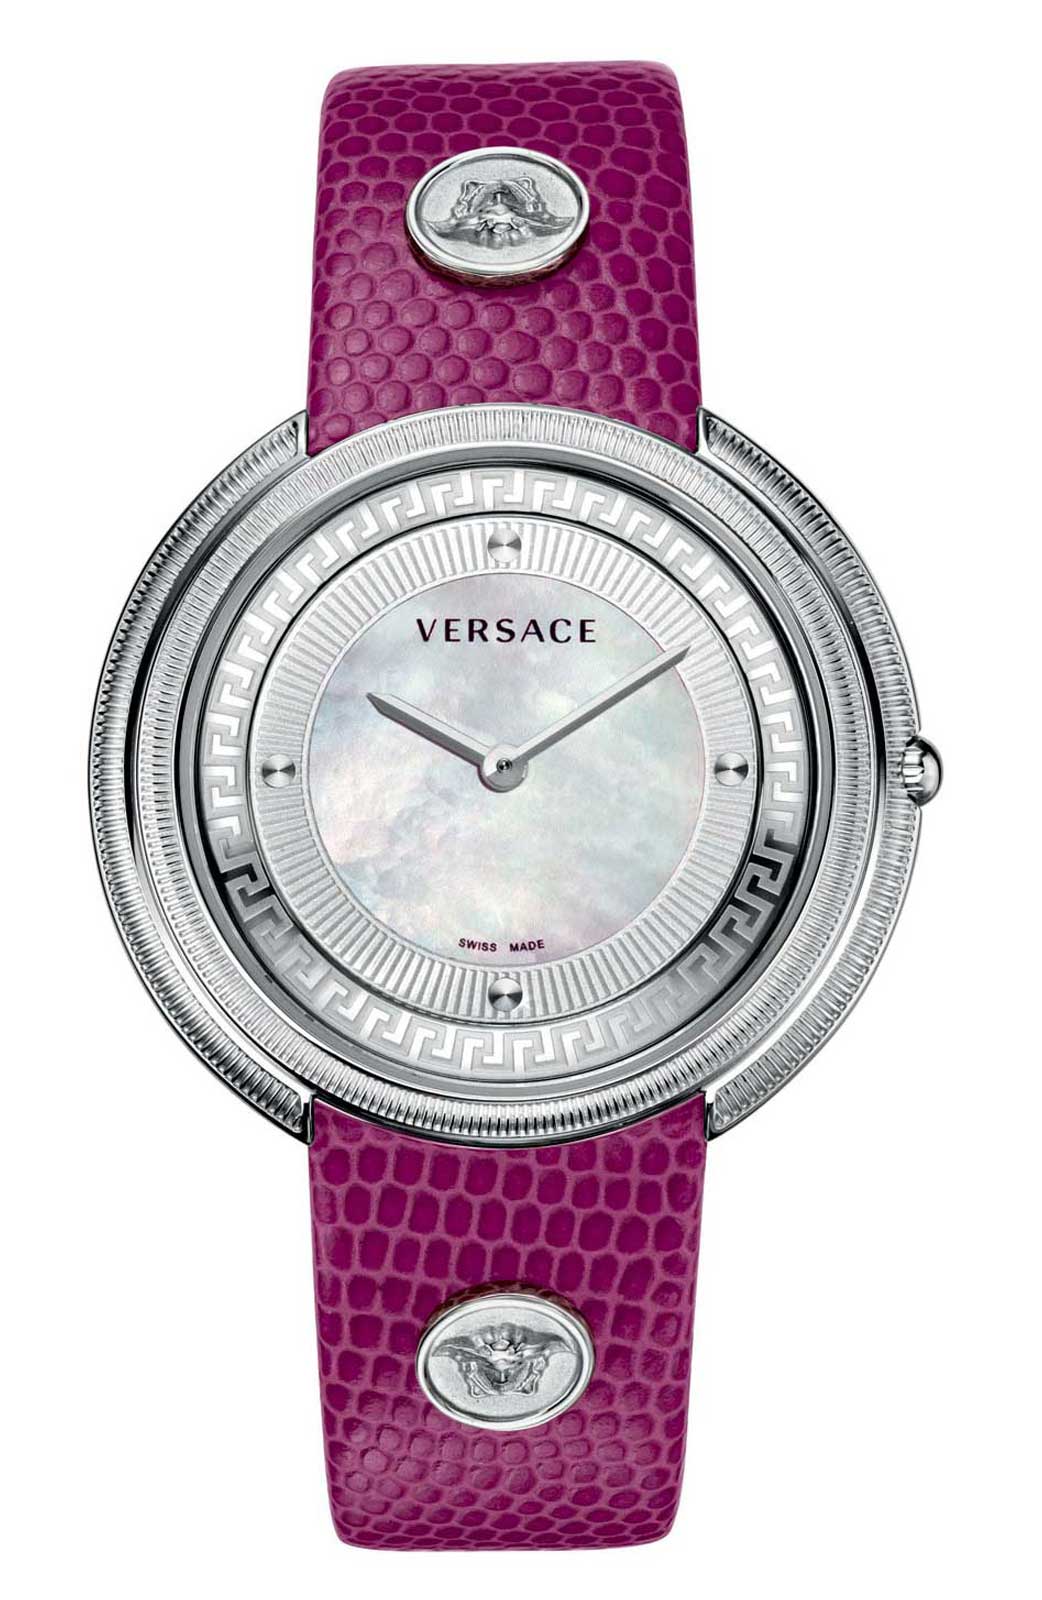 Versace QUARTZ watch 762 FUCHSIA CALF STRAP LIZARD